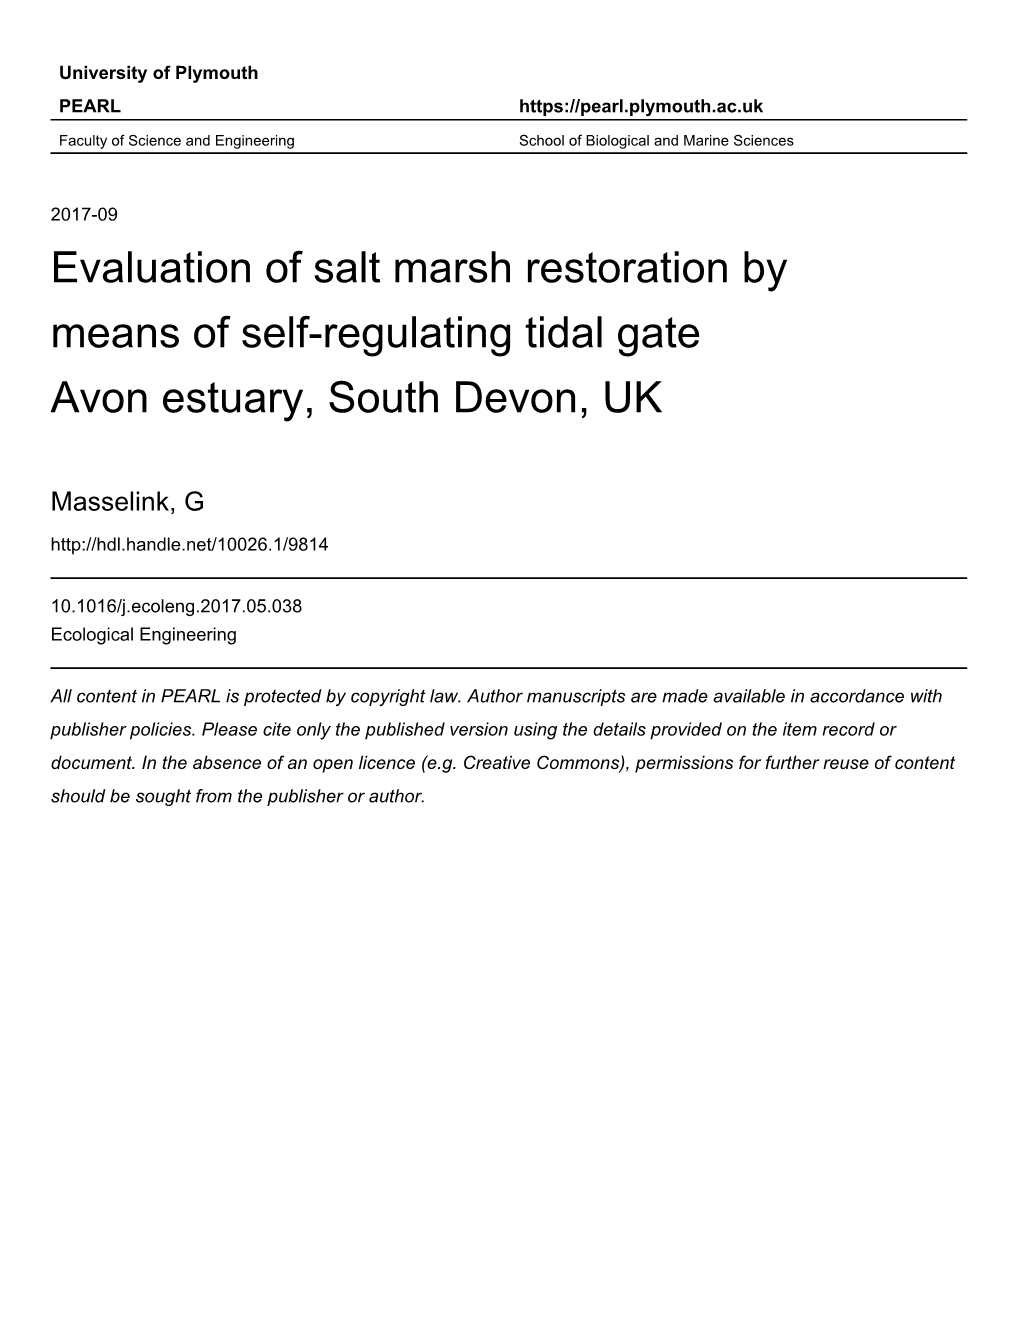 Evaluation of Salt Marsh Restoration by Means of Self-Regulating Tidal Gate Avon Estuary, South Devon, UK